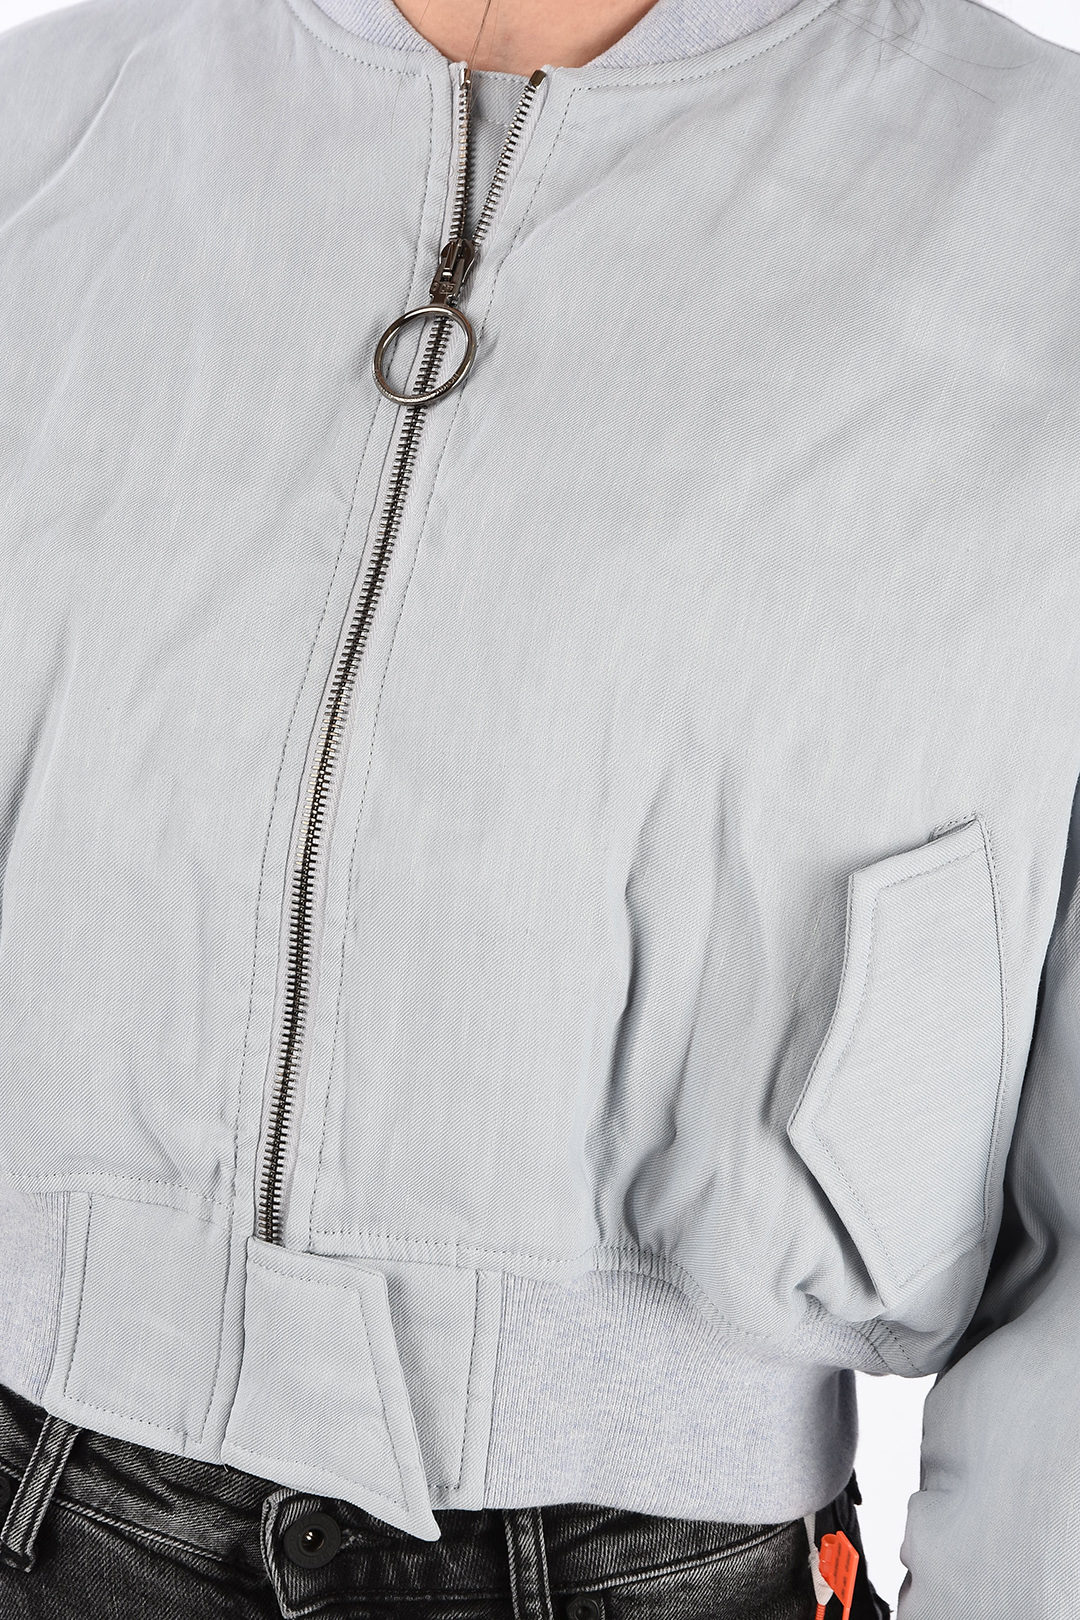 OFF-WHITE Appliquéd Wool-Blend Felt and Leather Varsity Jacket for